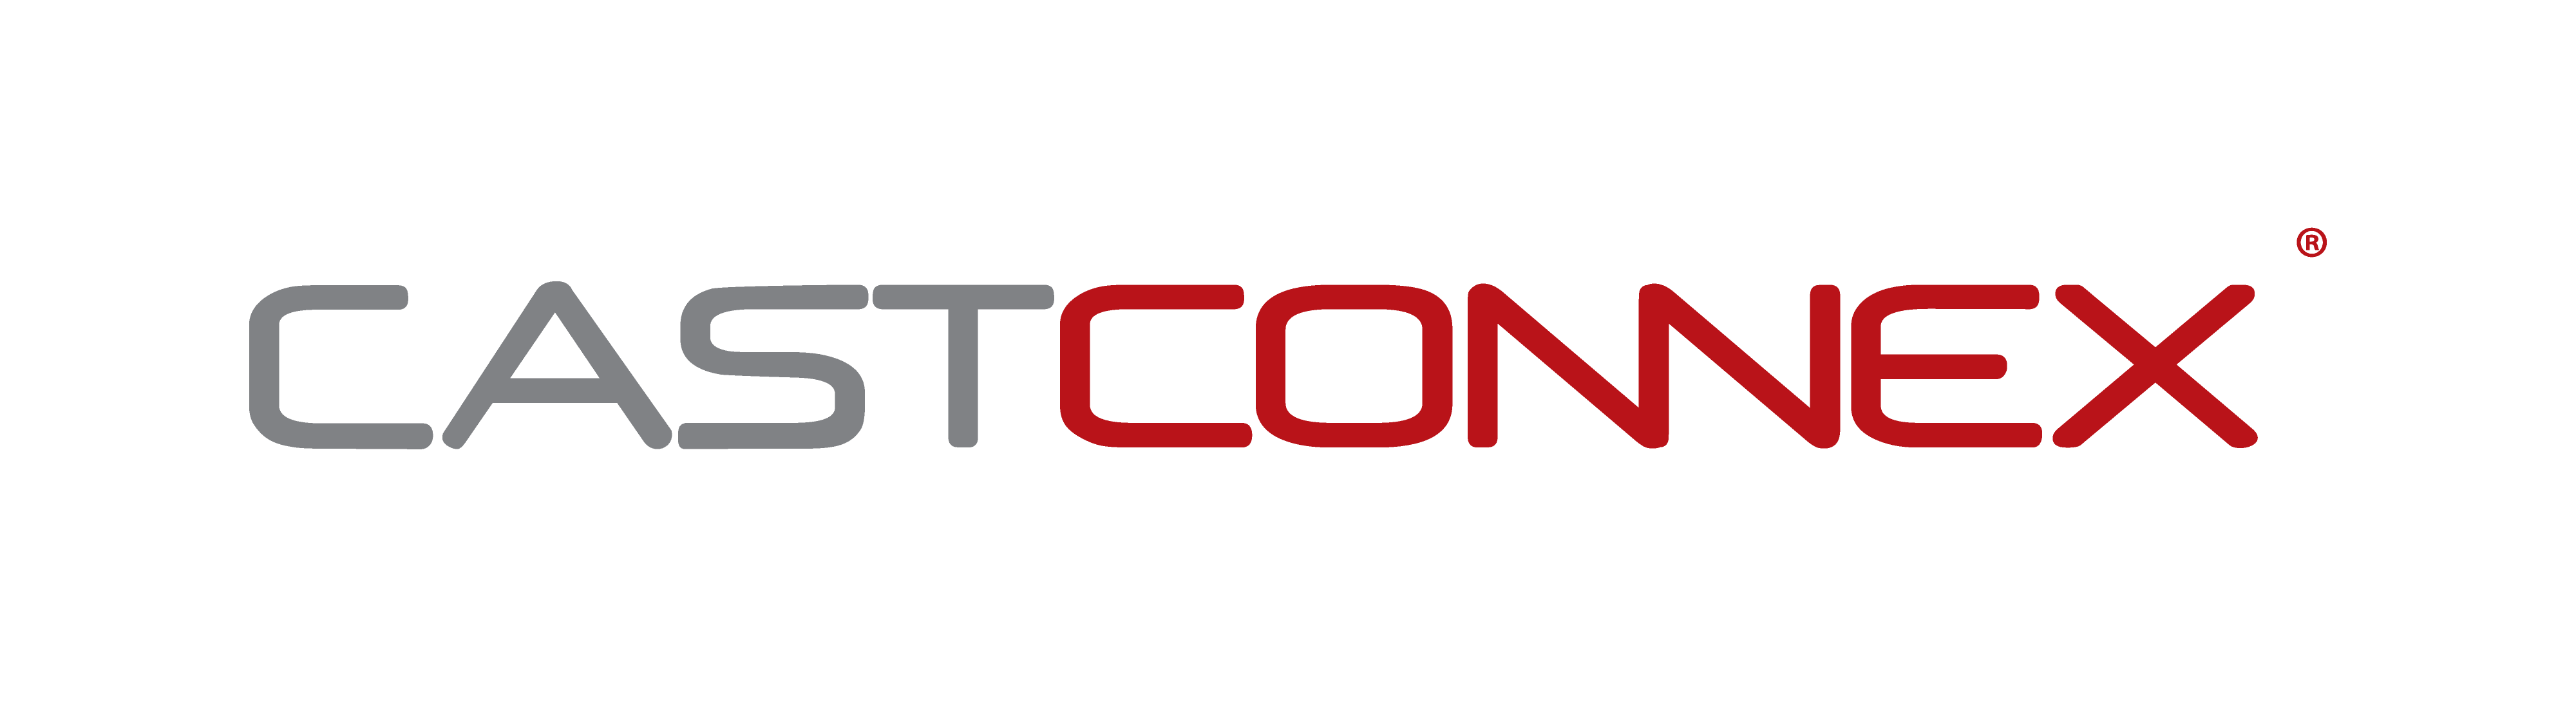 CastConnex logo